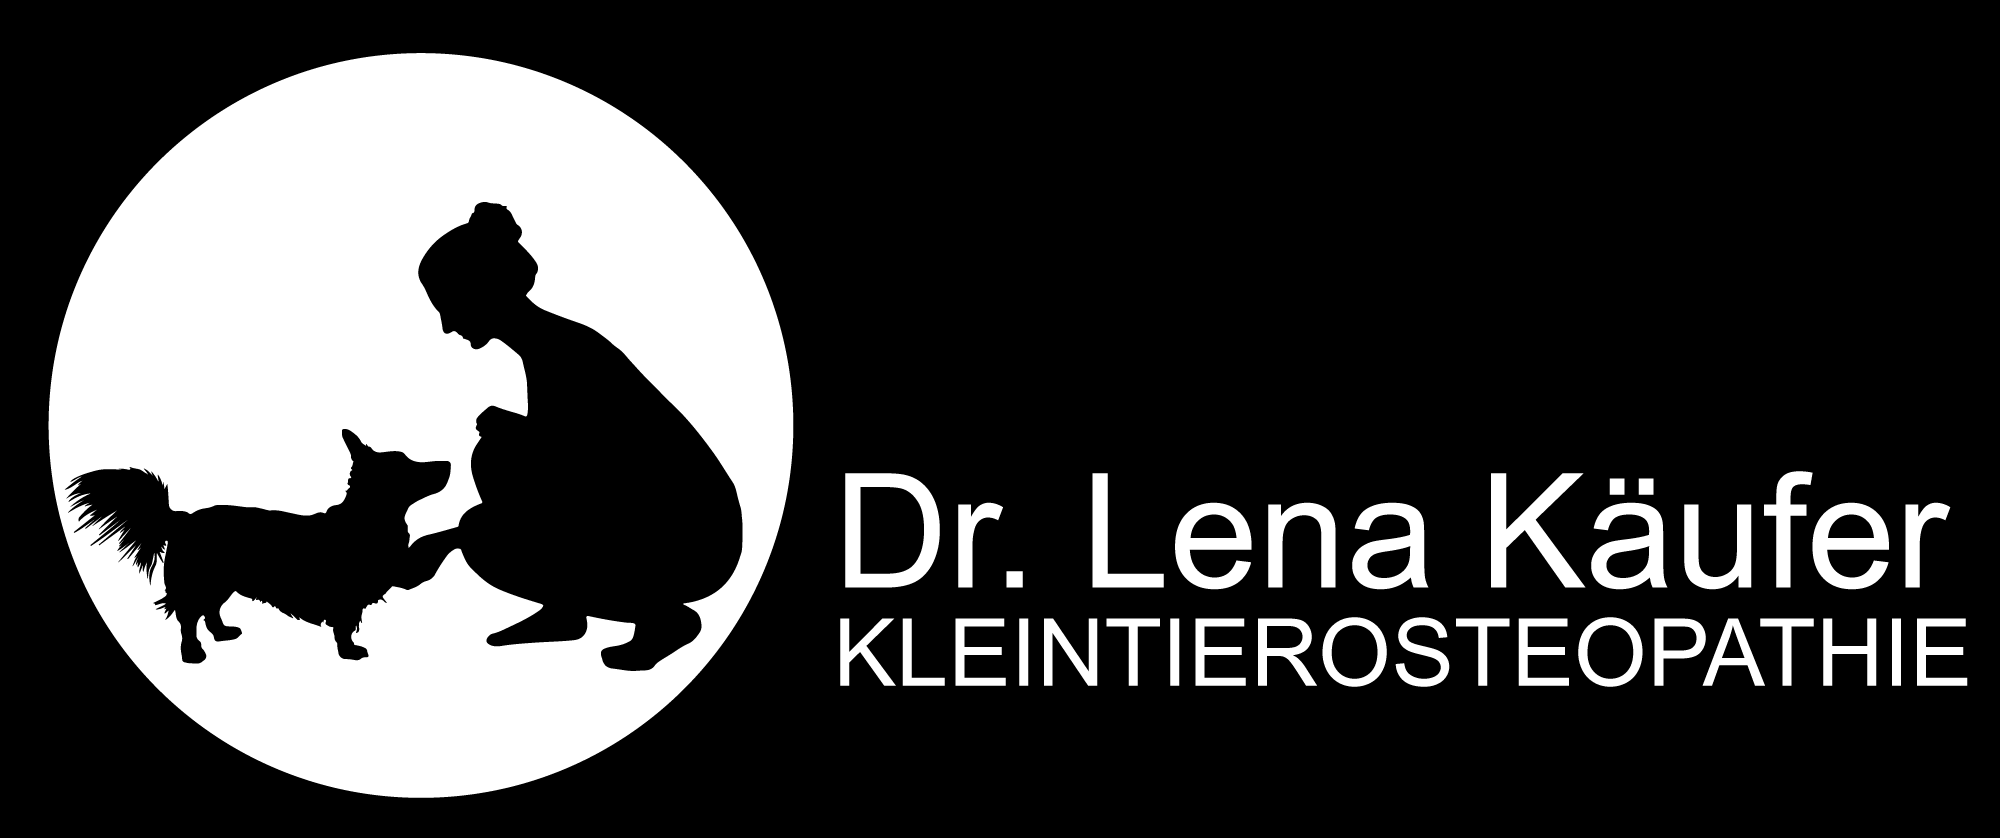 Dr. Lena Käufer – Kleintierosteopathie